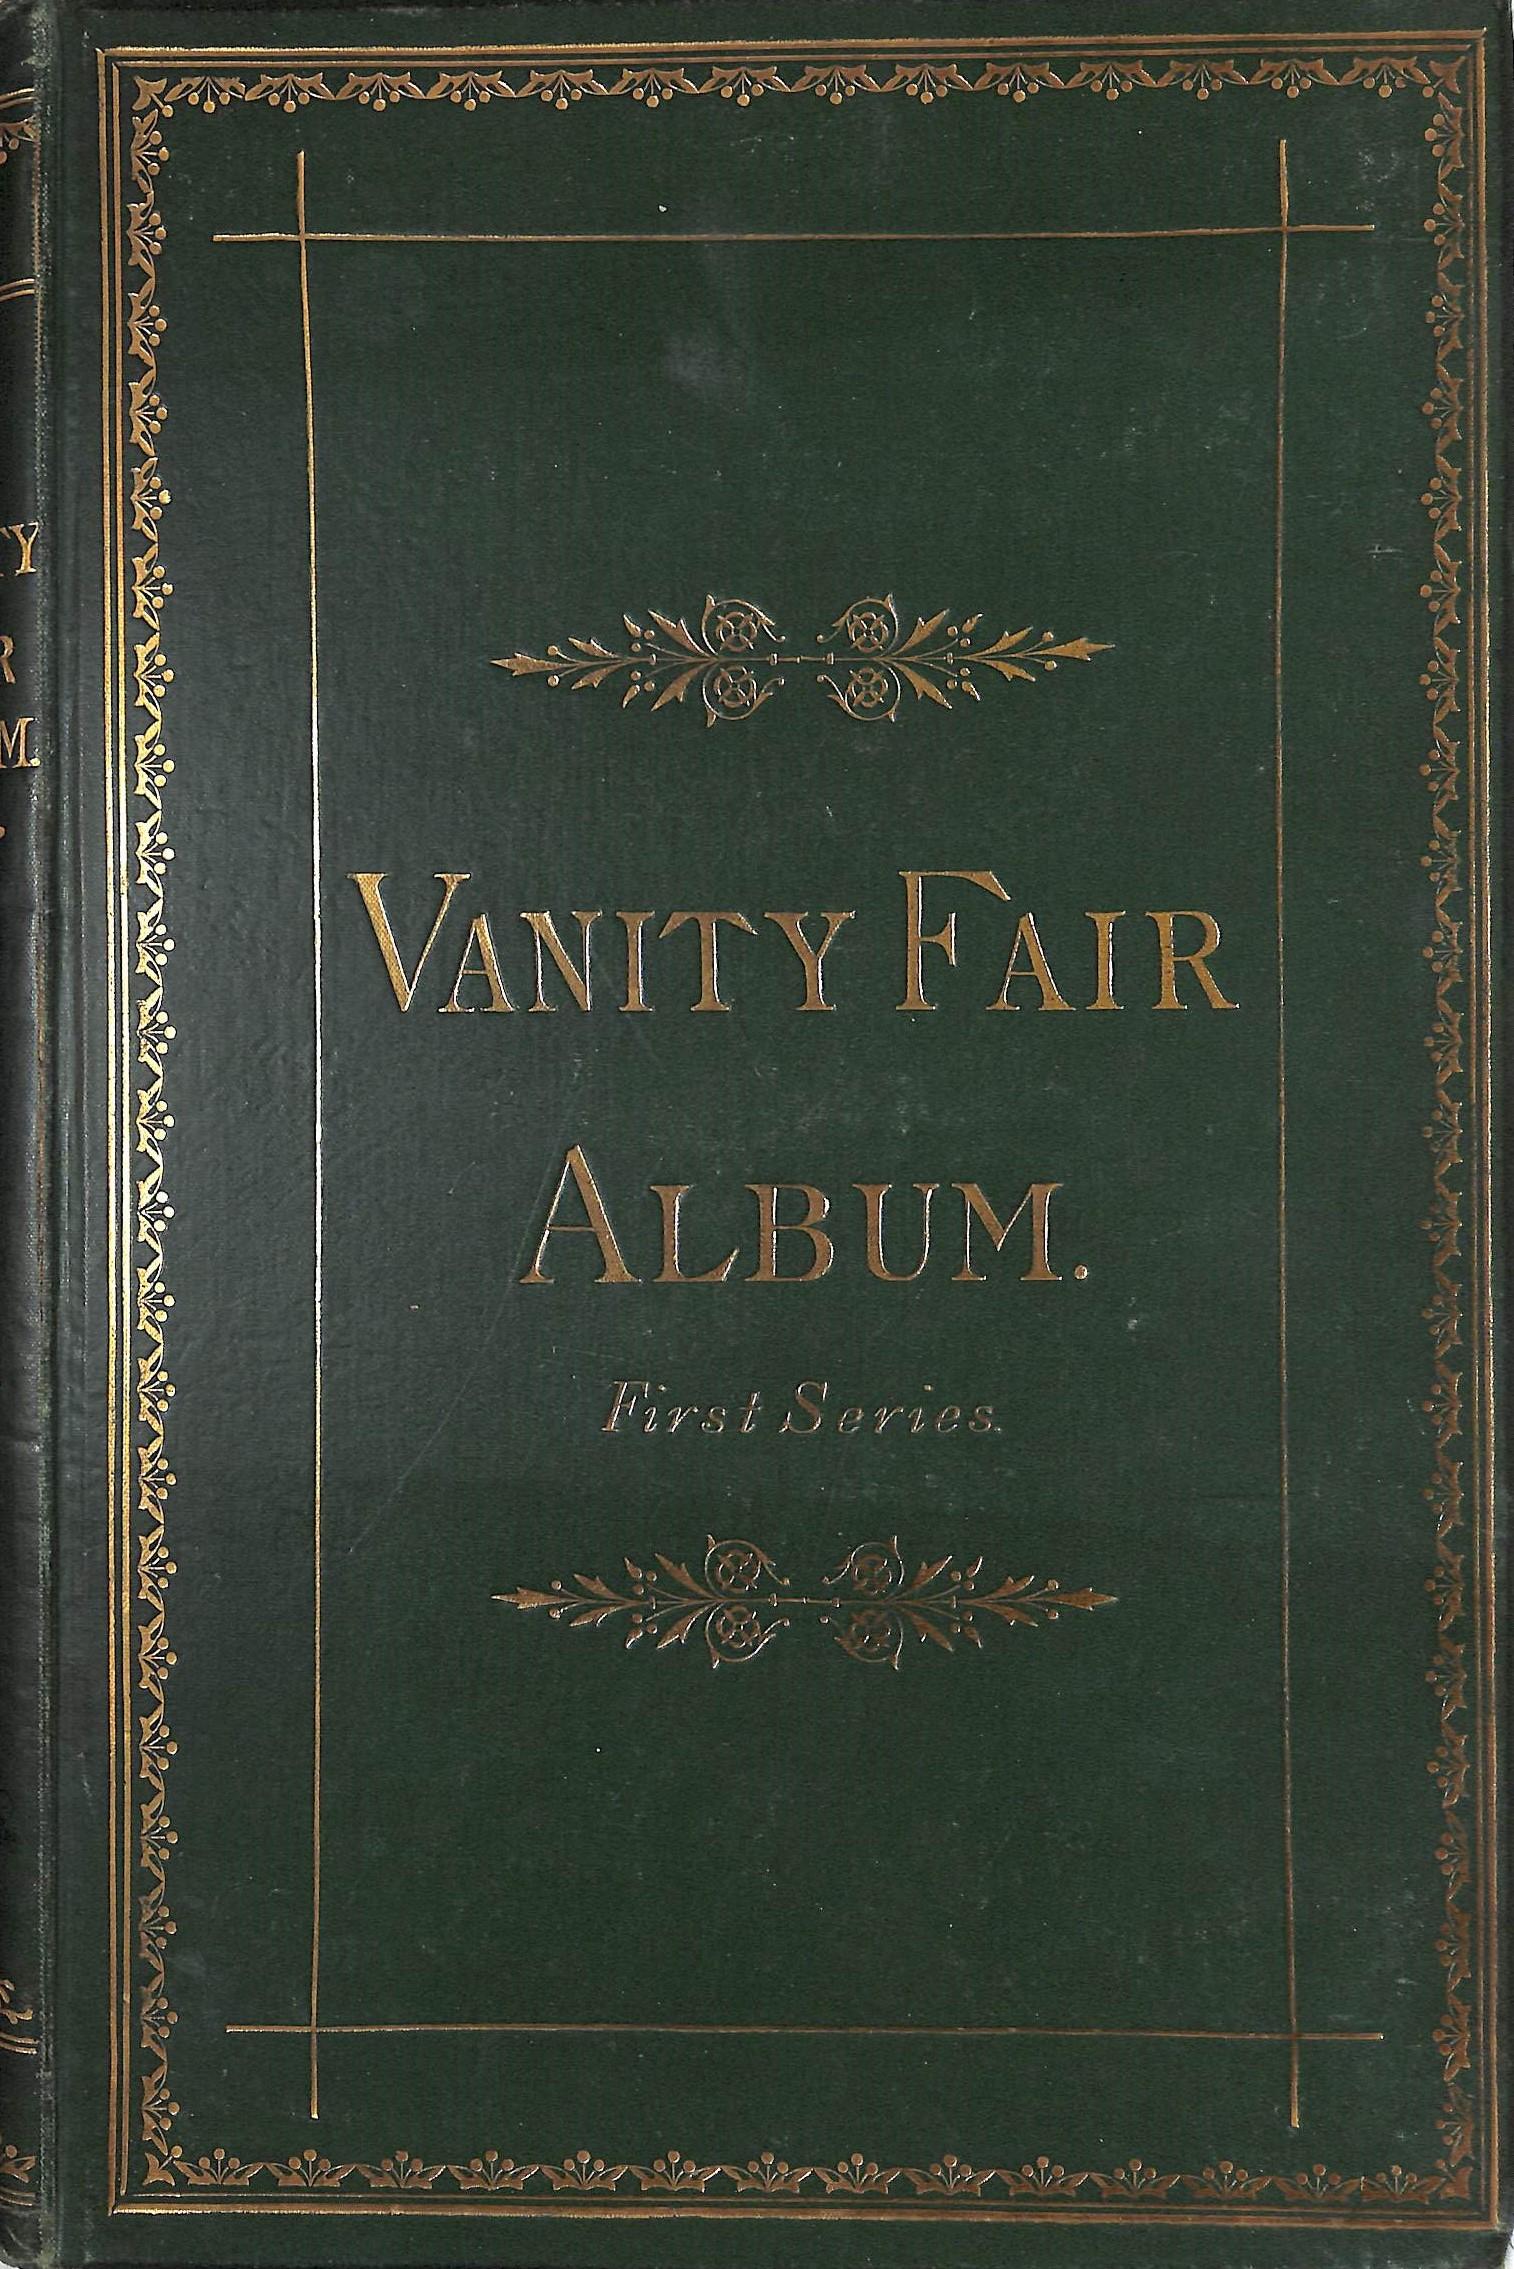 Unknown Figurative Print - Vanity Fair Album. First Series.